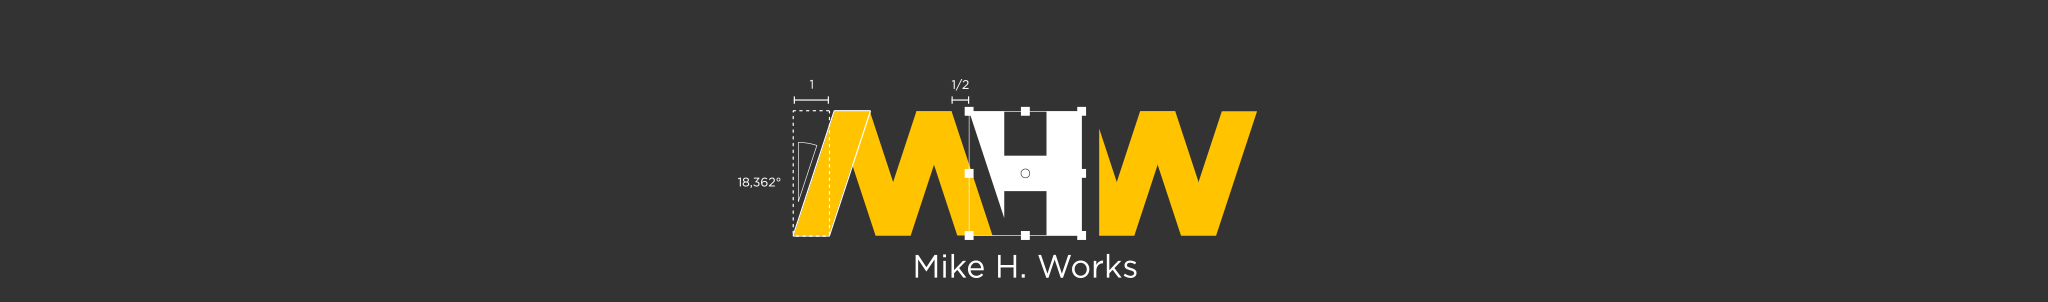 Banner de perfil de Mike H. Works